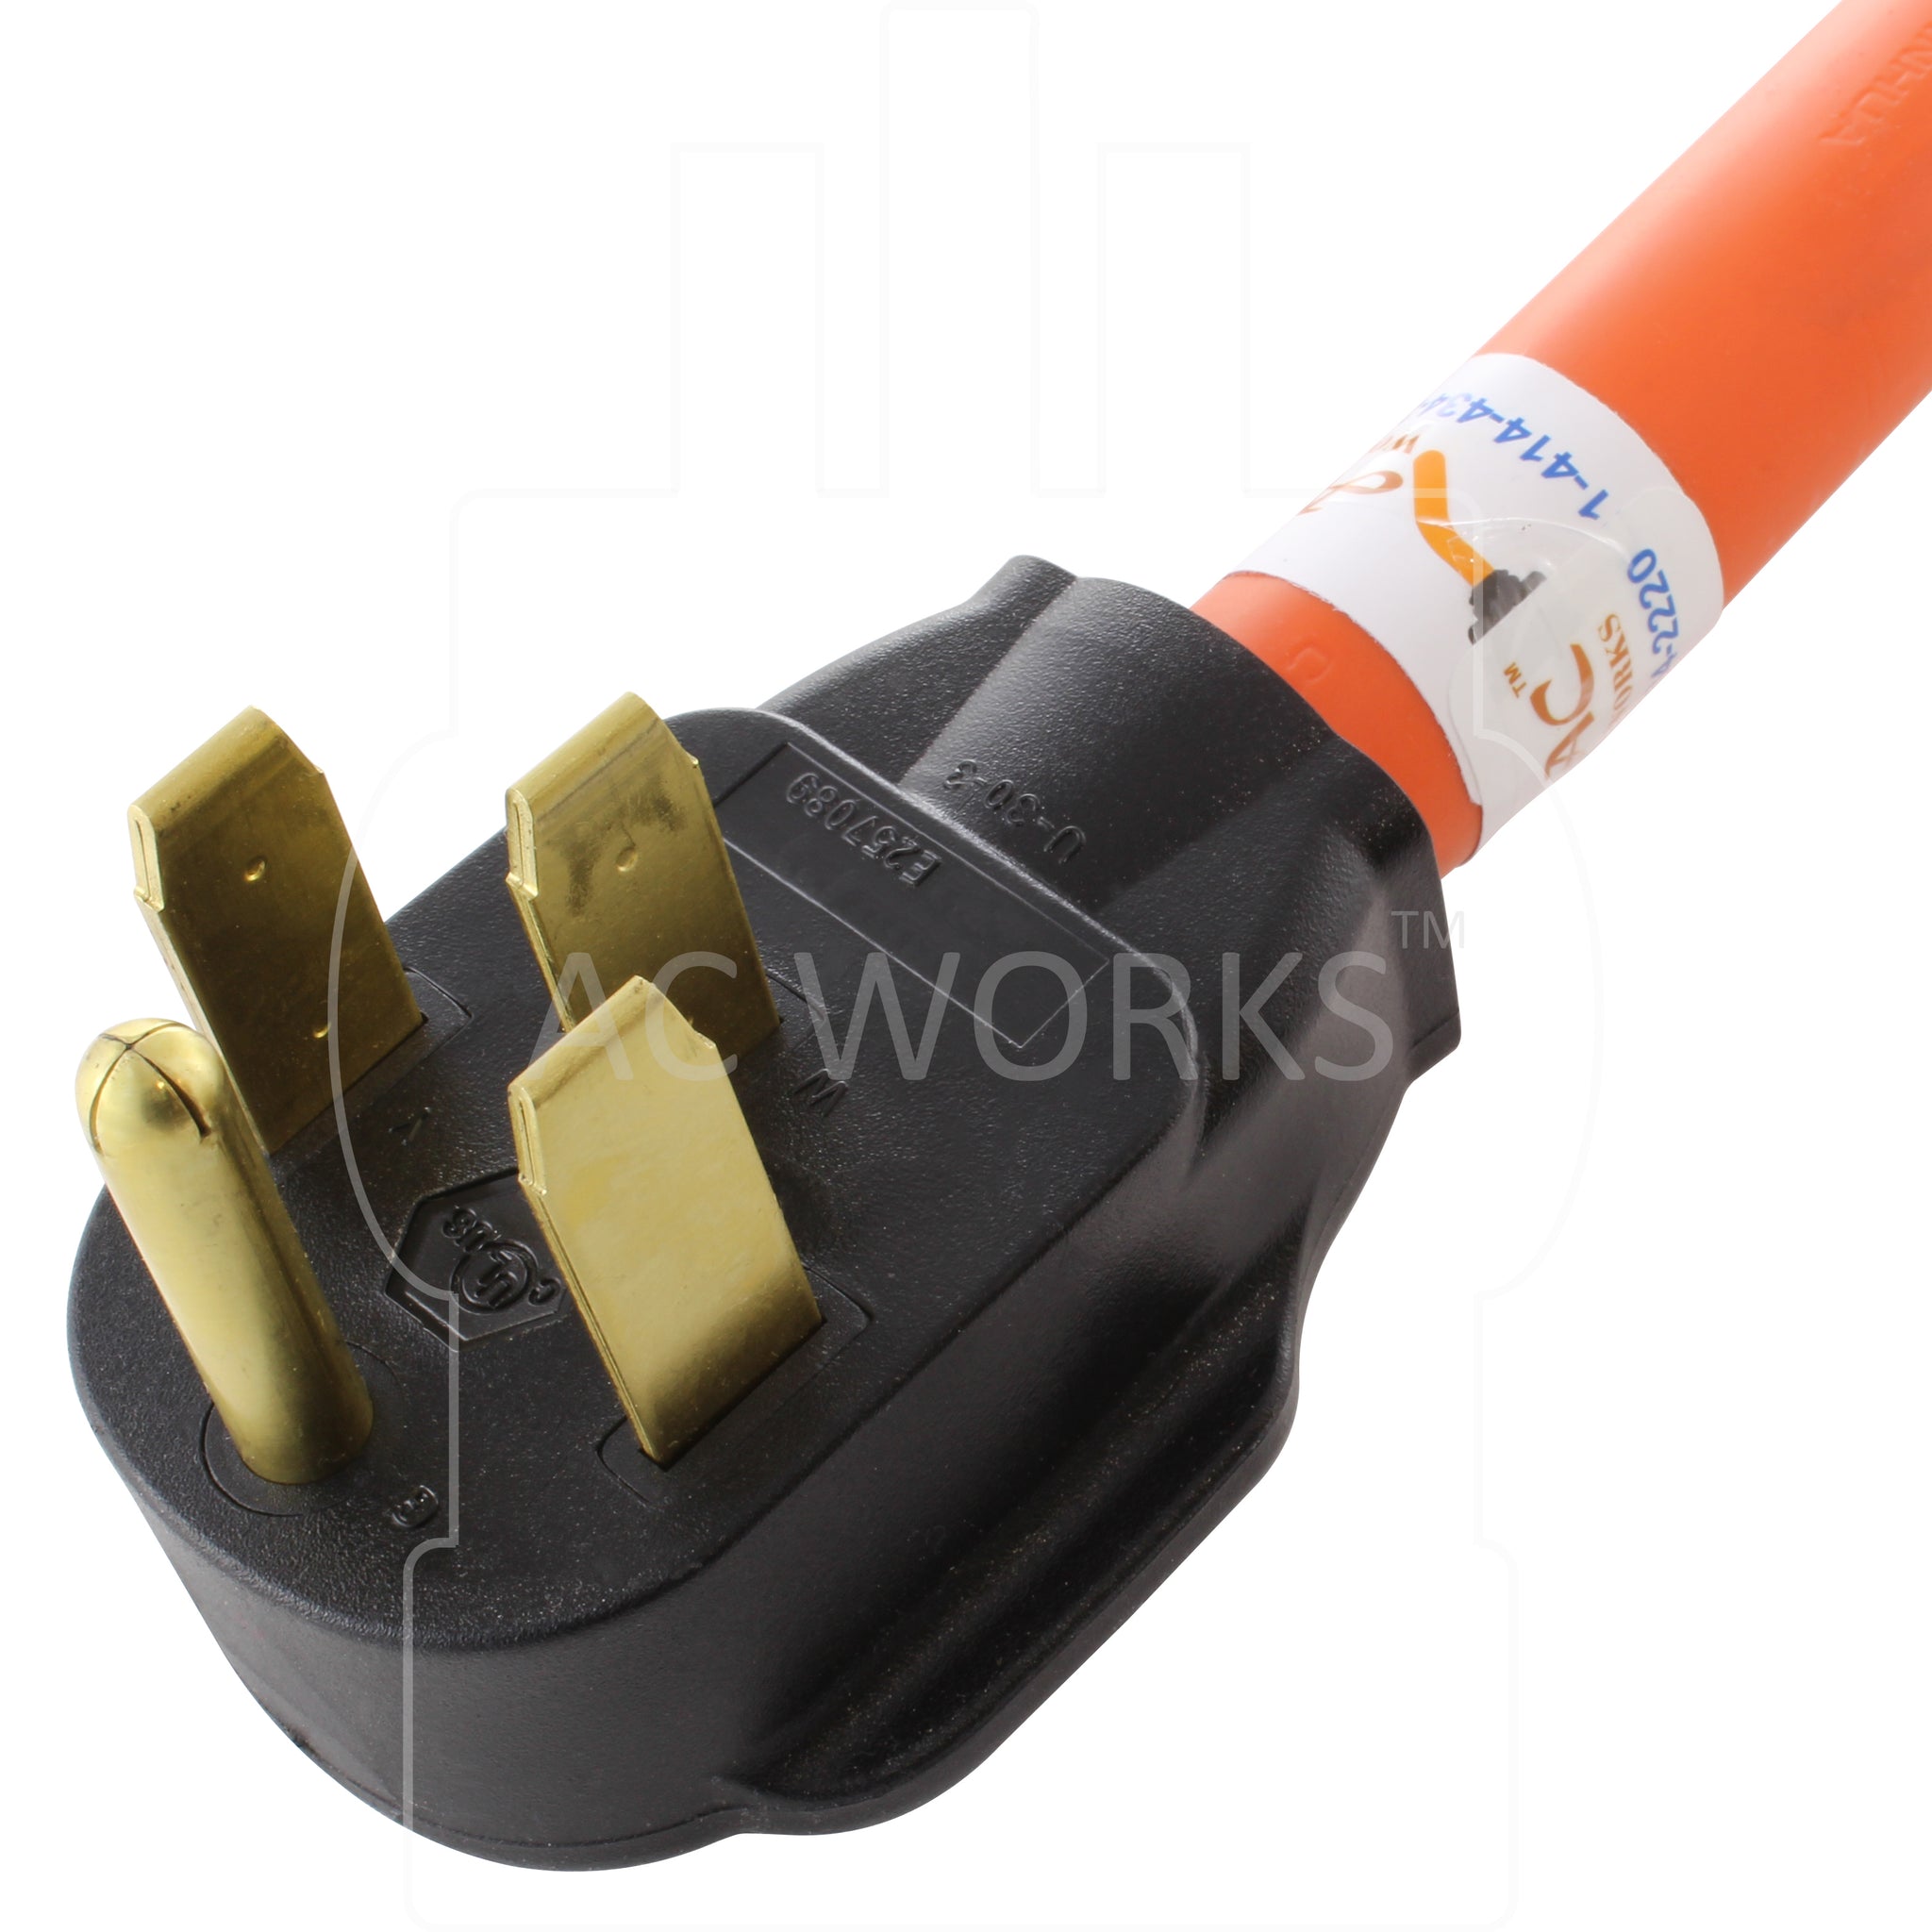 AC WORKS® 1.5FT 50A RV/Range/ Generator 14-50 Plug to 6-50R Welder